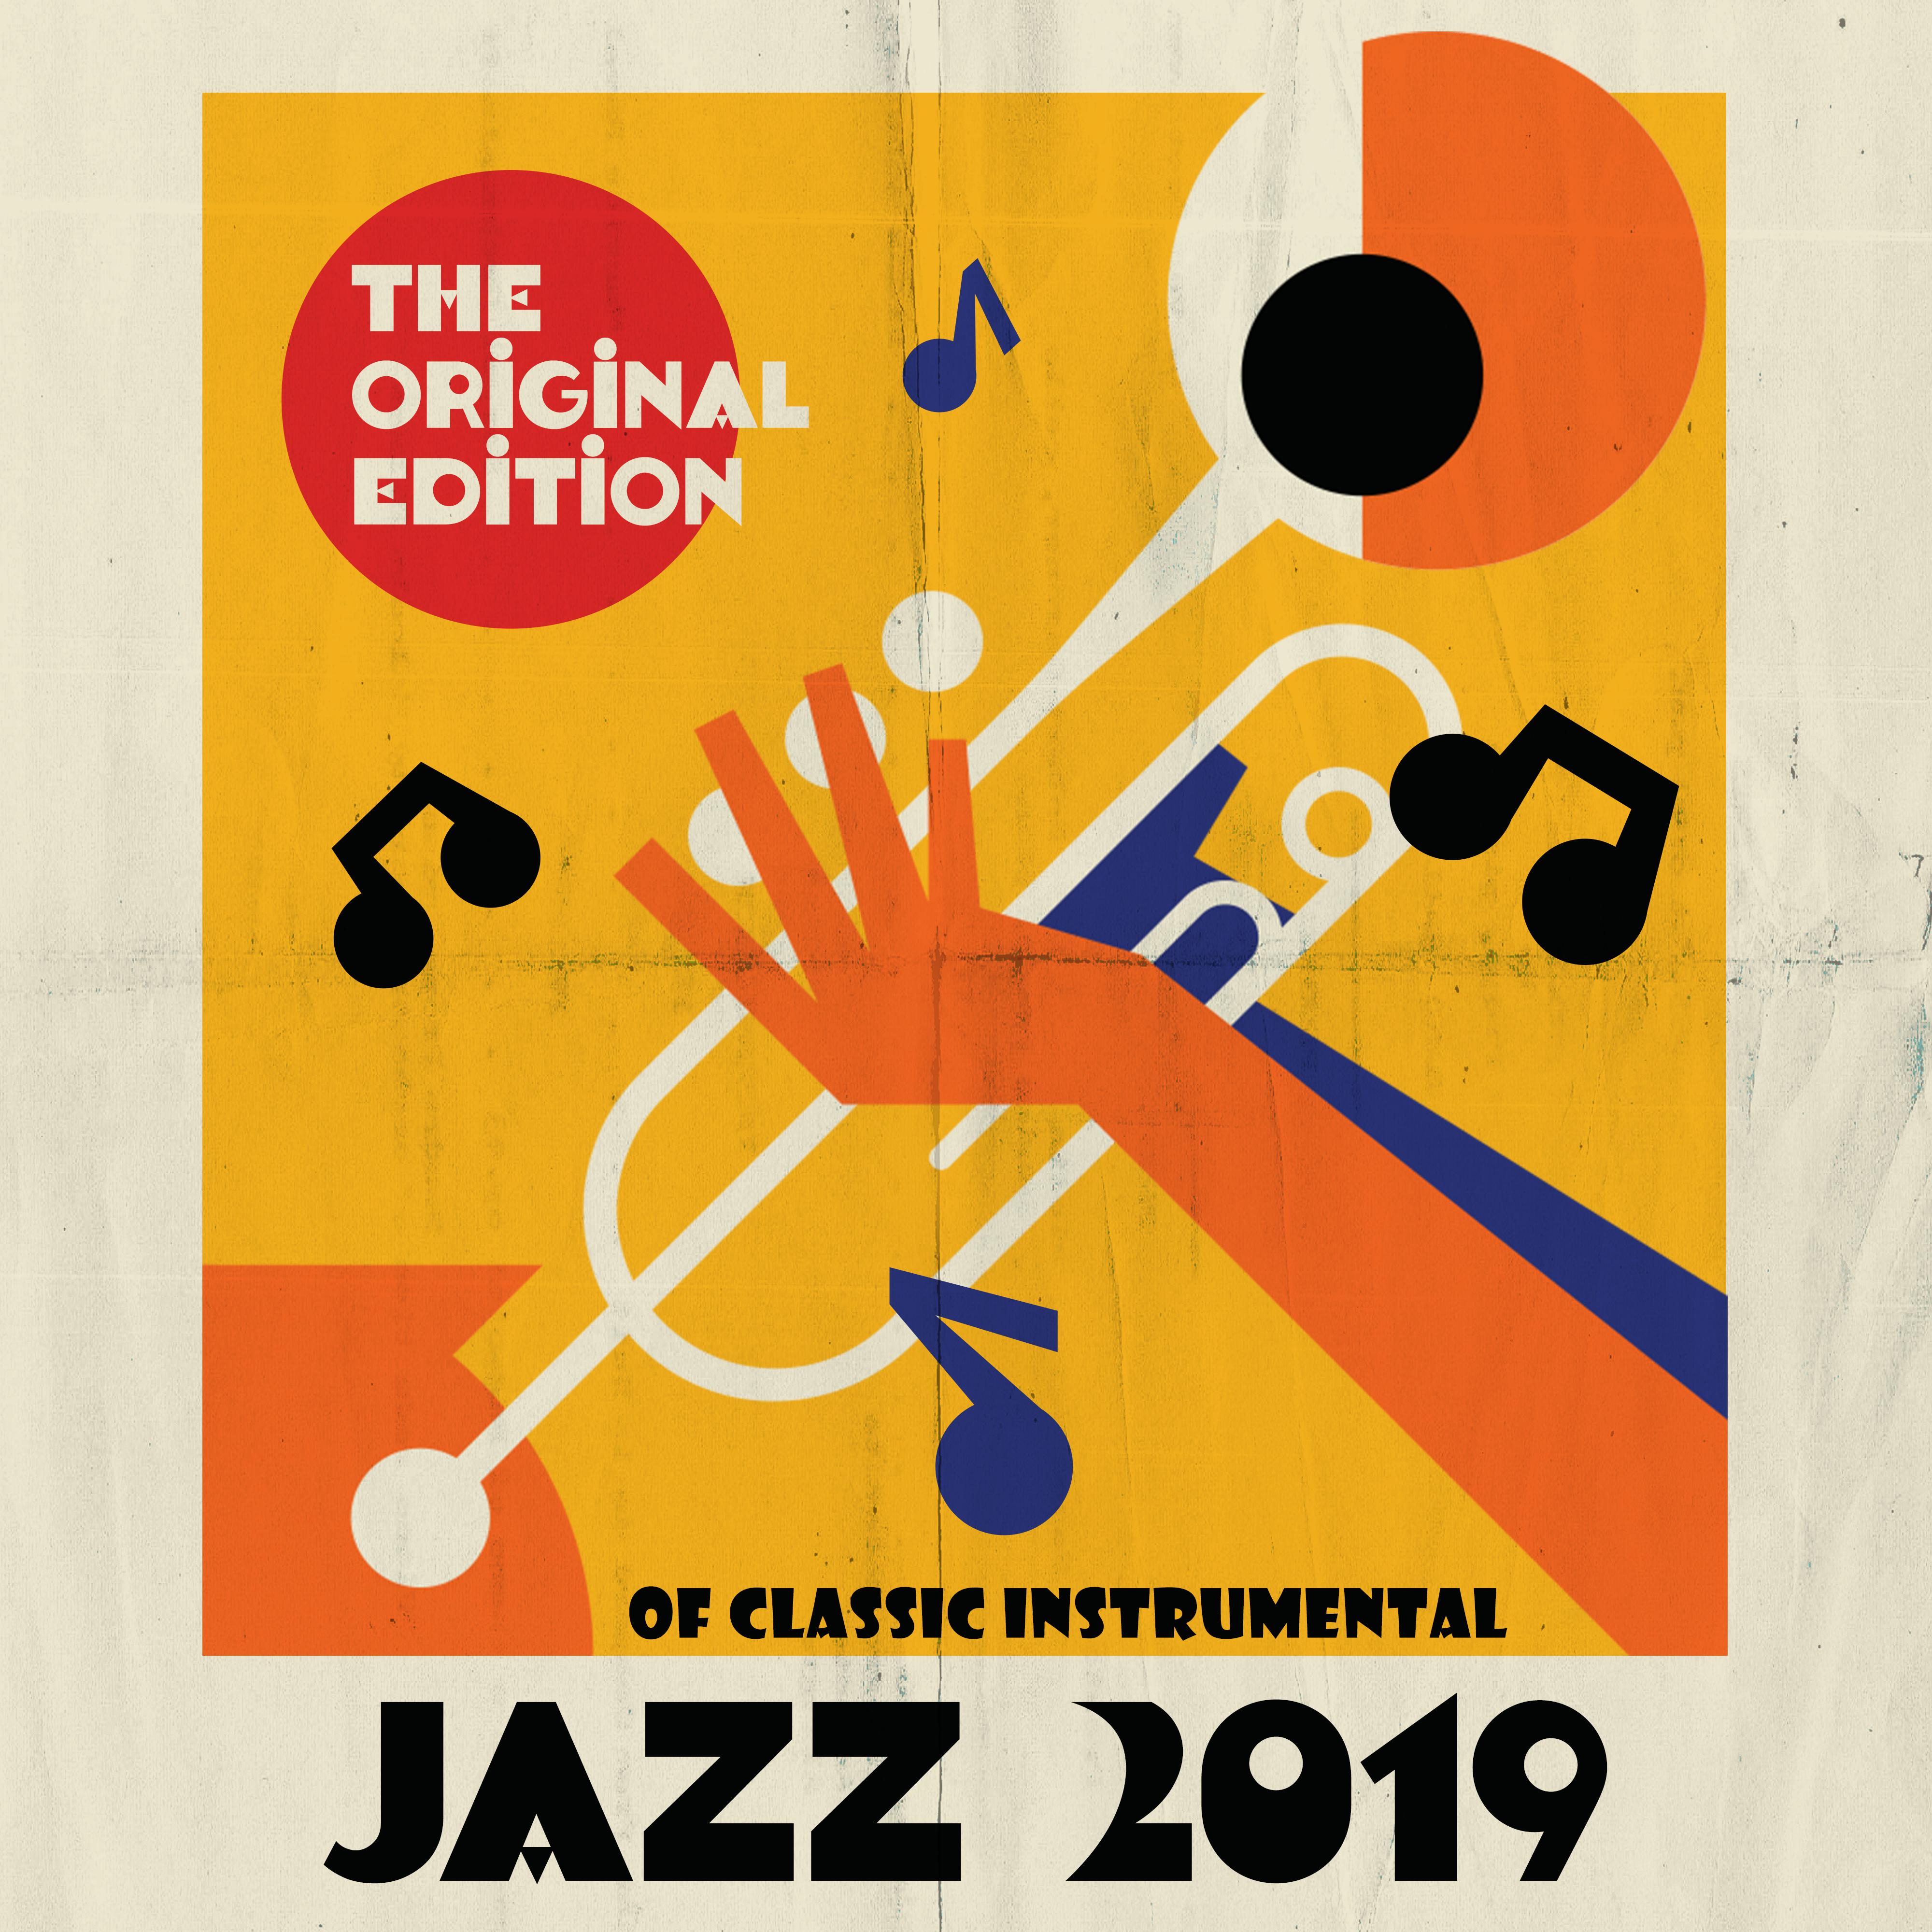 The Original Edition of Classic Instrumental Jazz 2019